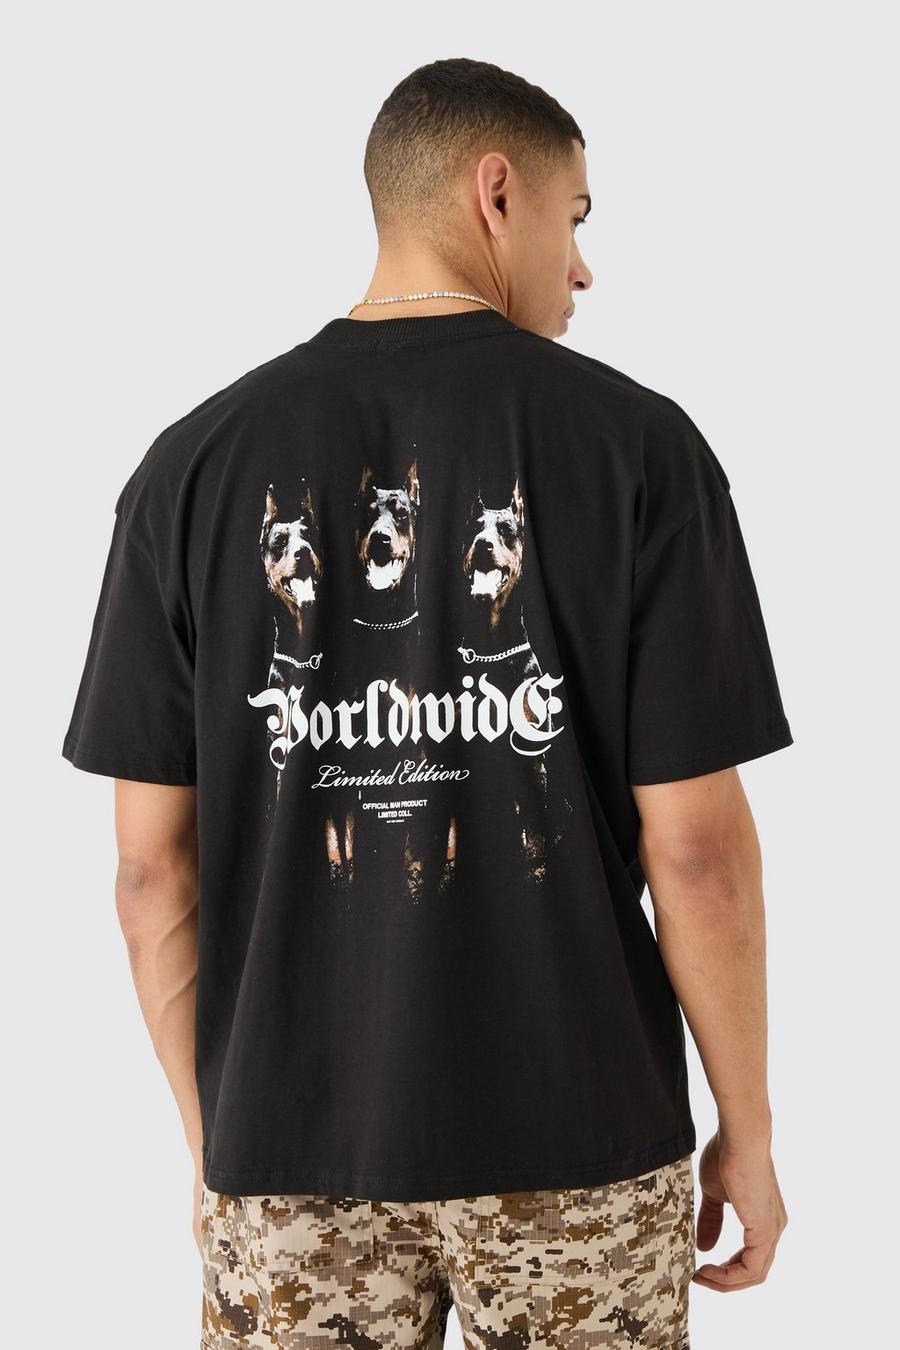 Kastiges Oversize T-Shirt mit Worldwide-Print, Black